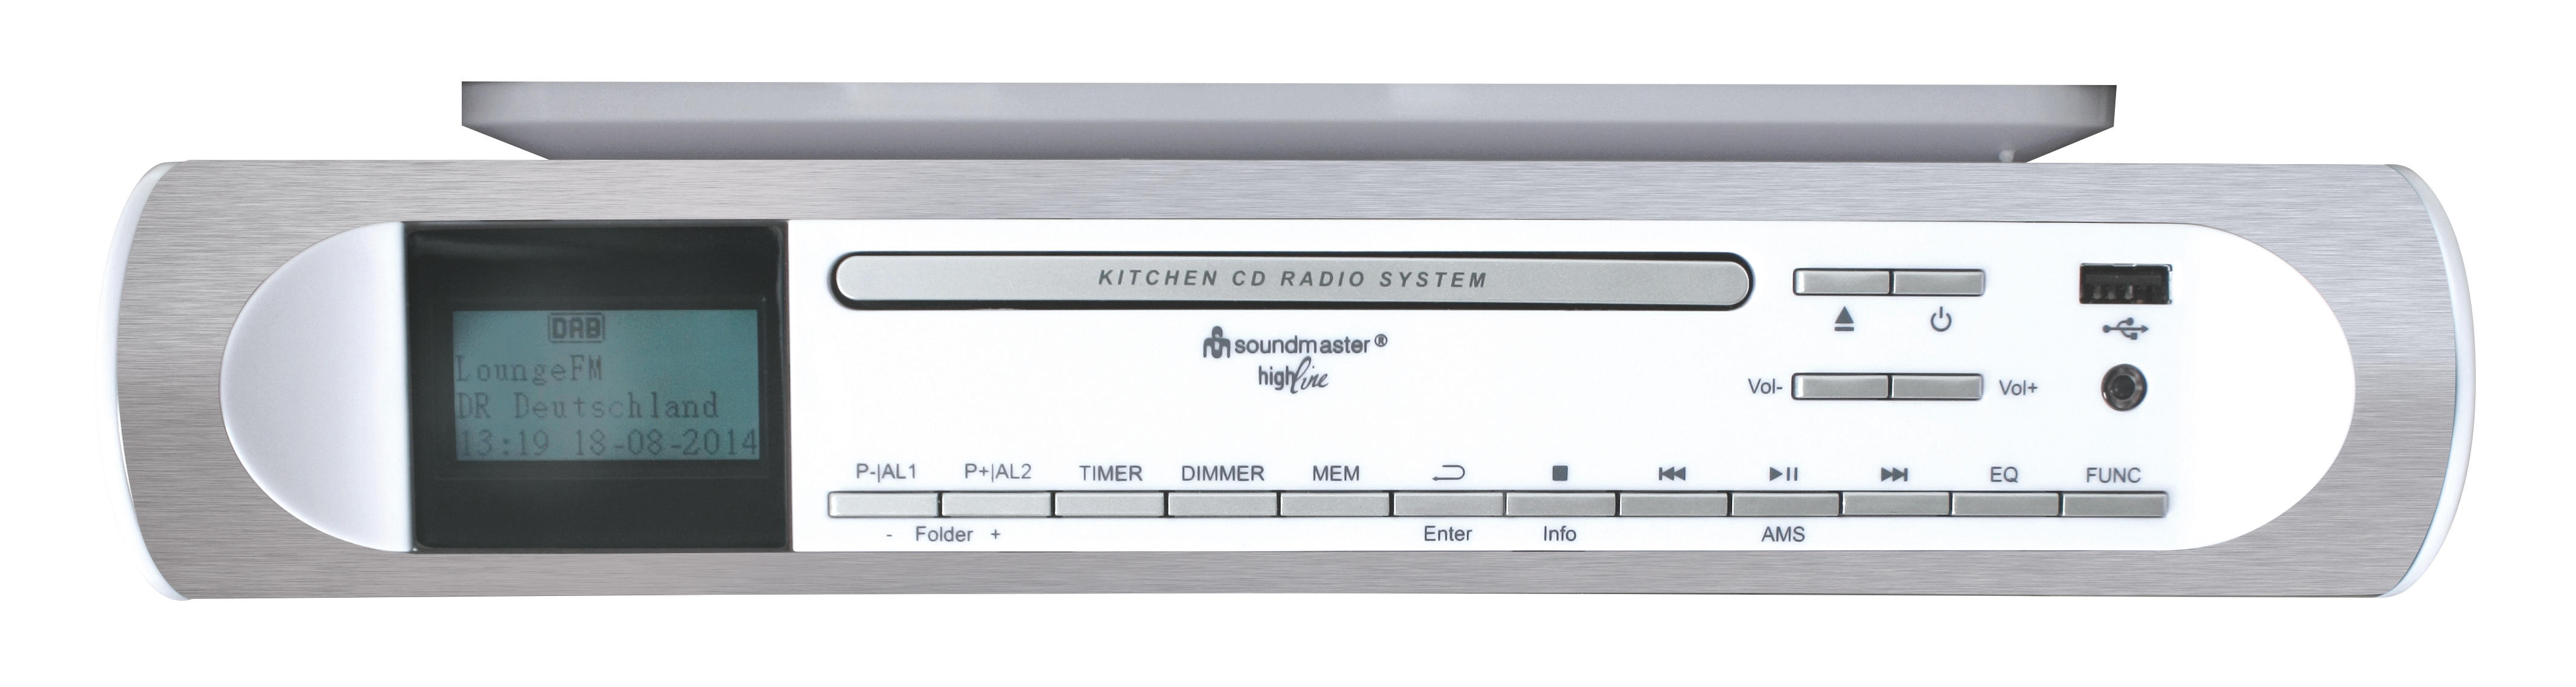 Radio, Silber/Weiß UR2170 DAB+ Tuner, SOUNDMASTER DAB, PLL